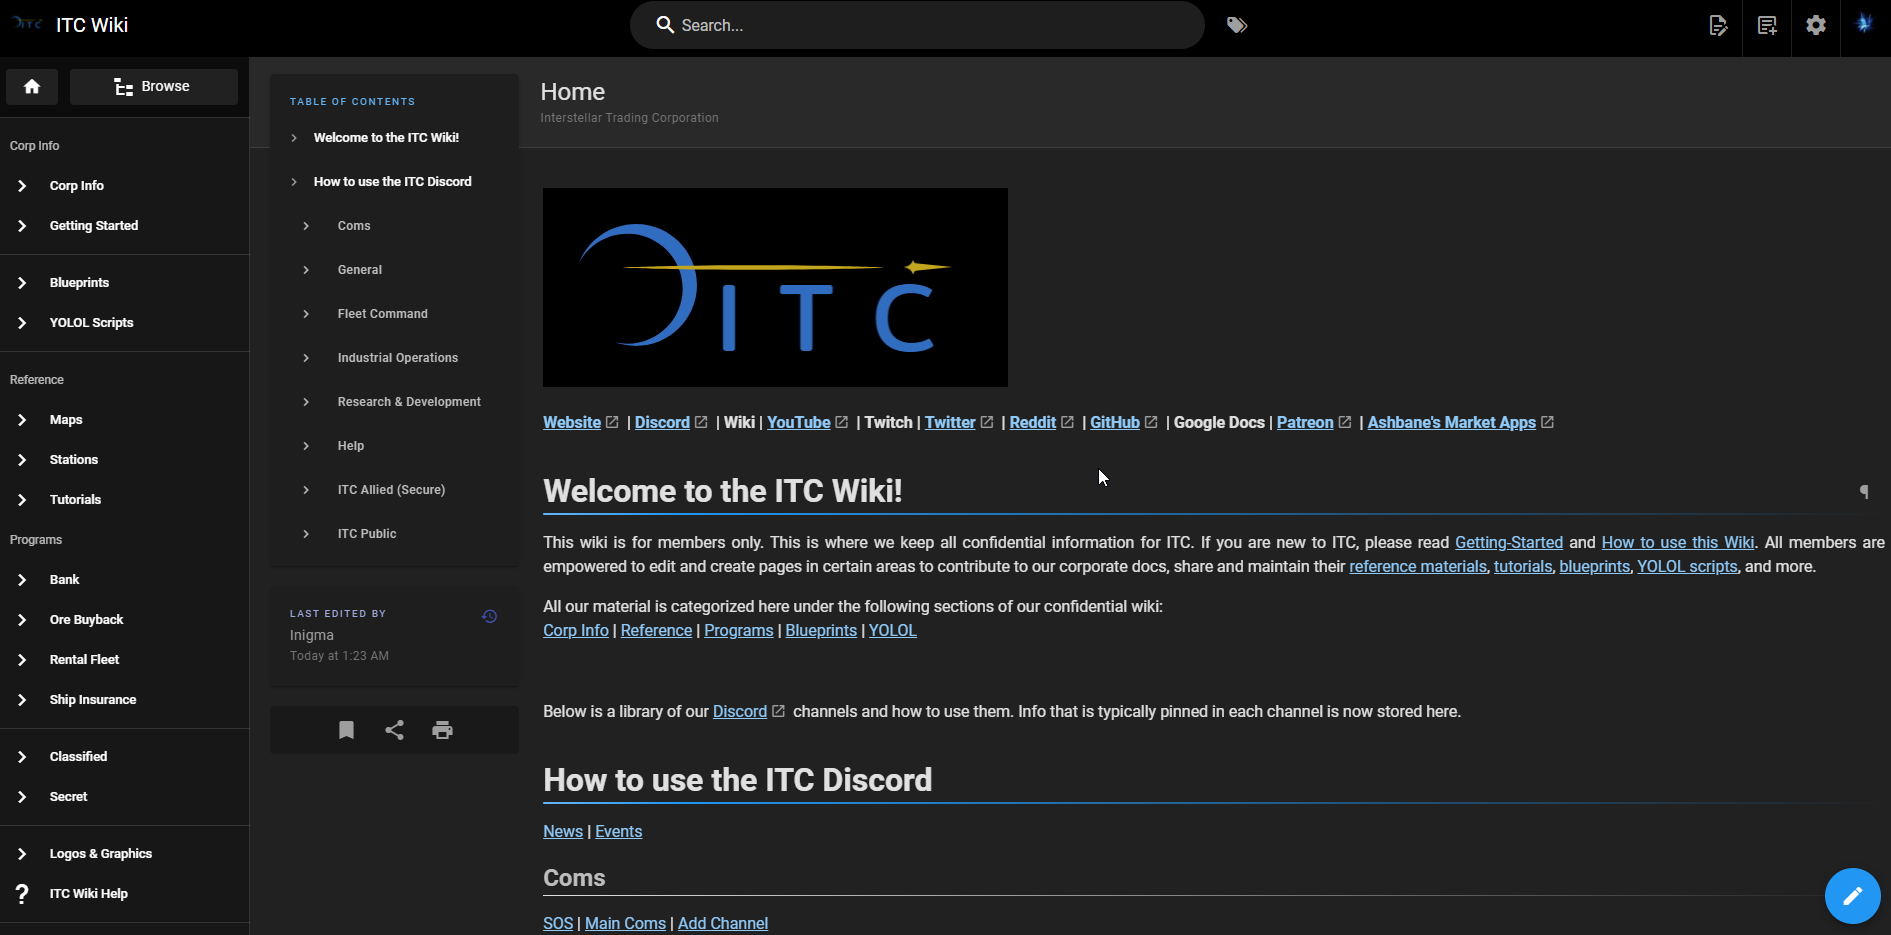 ITC's Secure Internal Wiki. 'Nuff said.